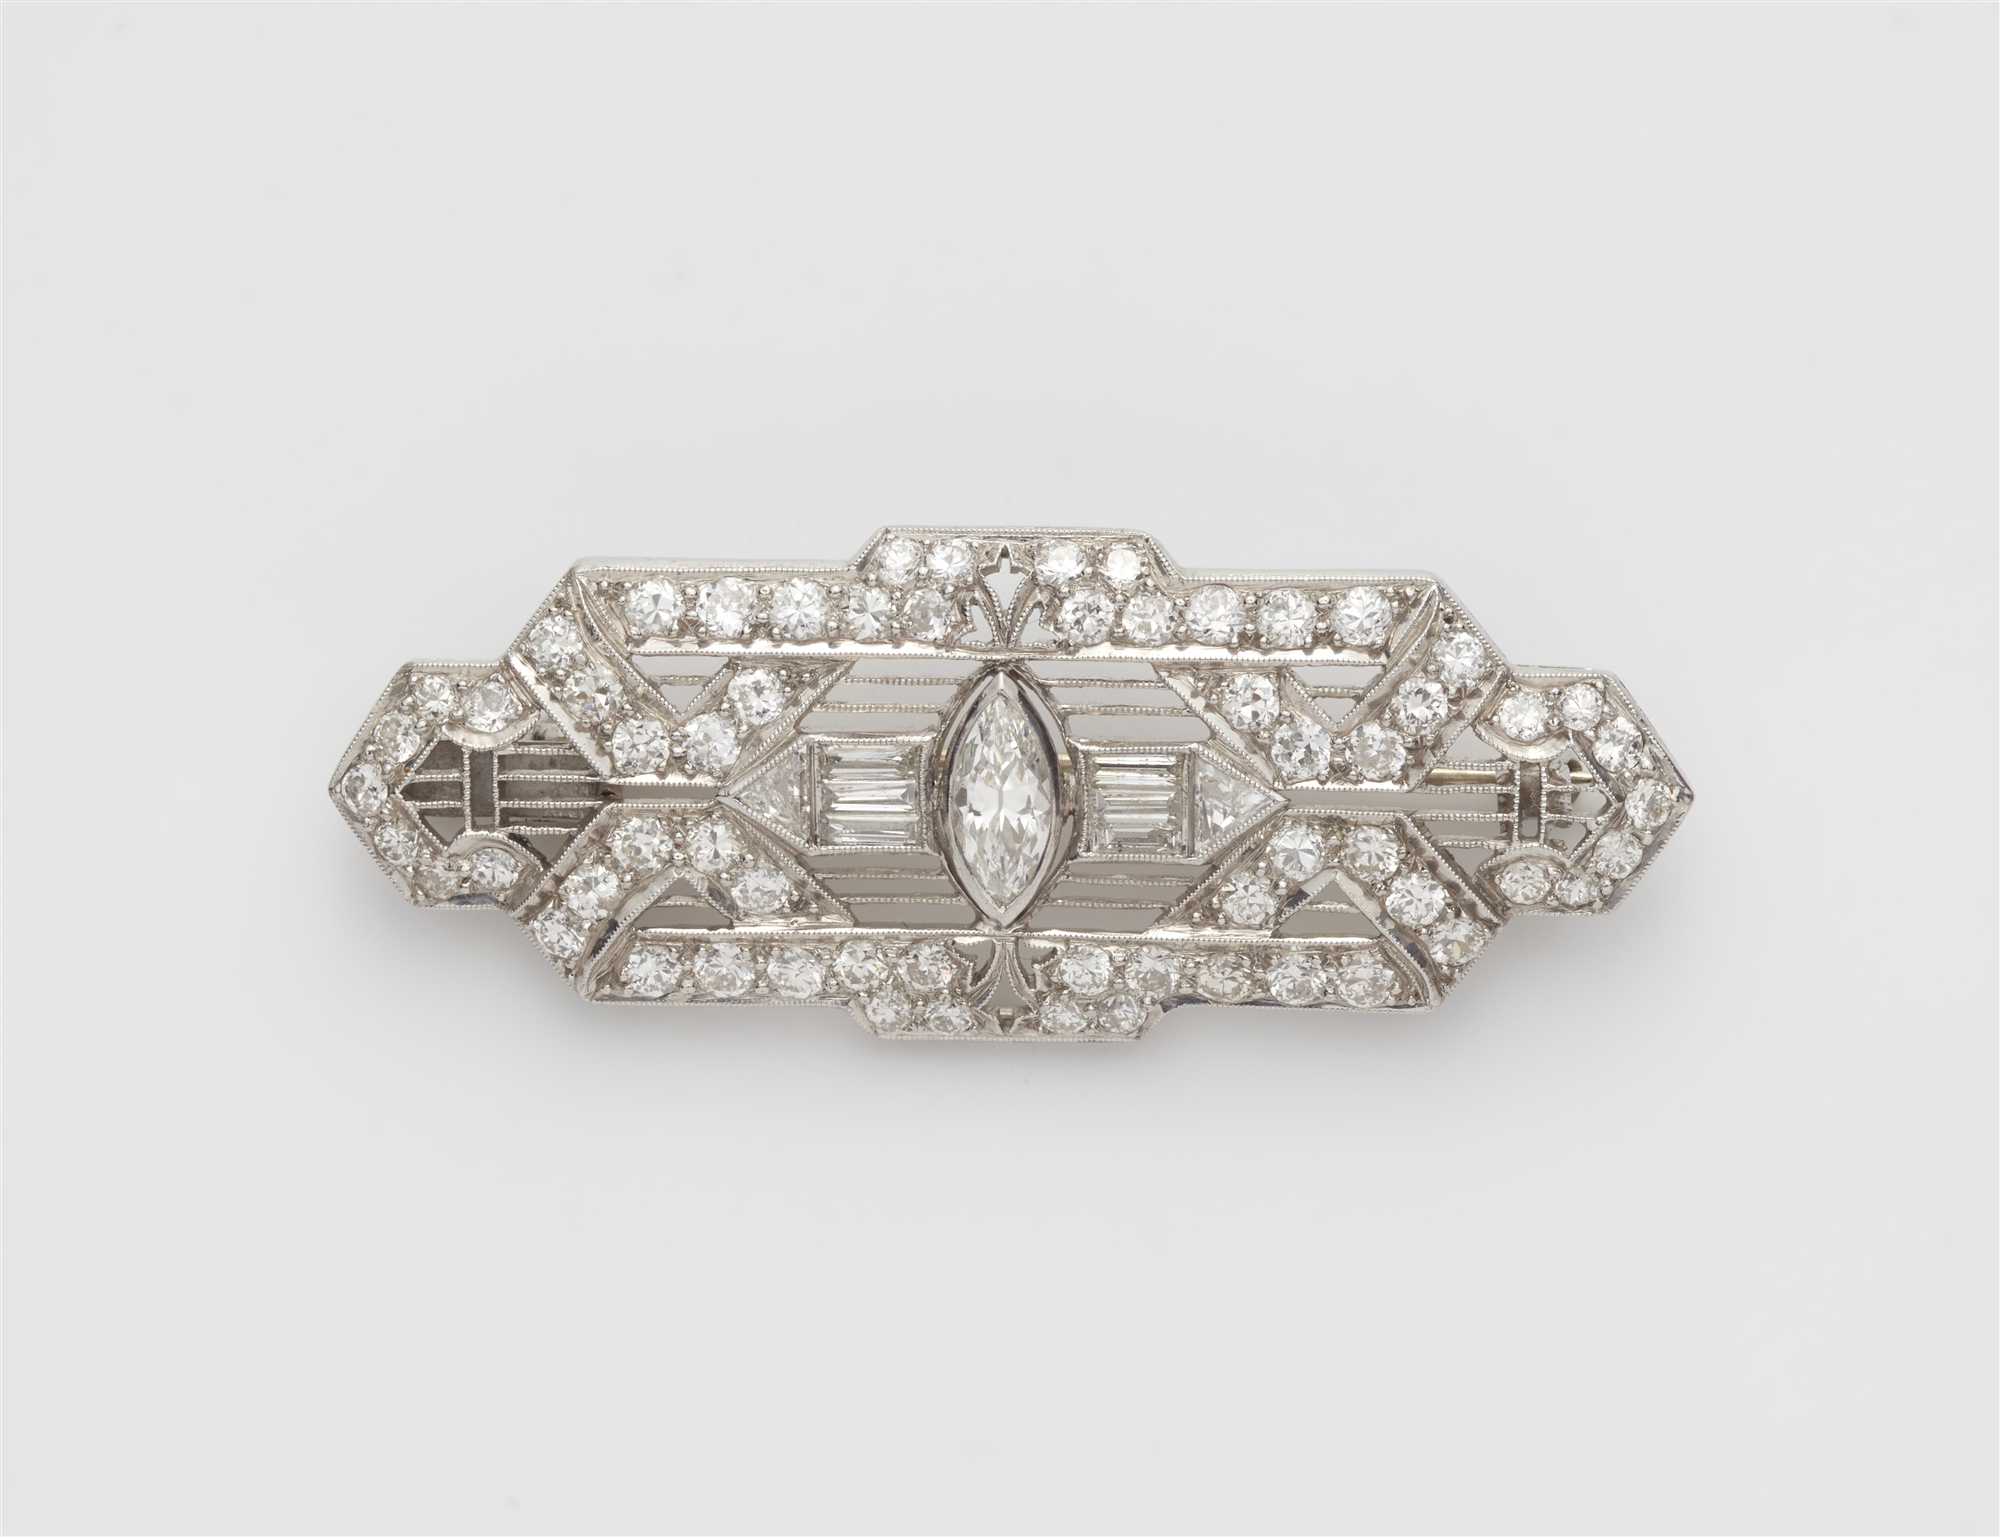 A platinum and diamond Art Déco brooch.